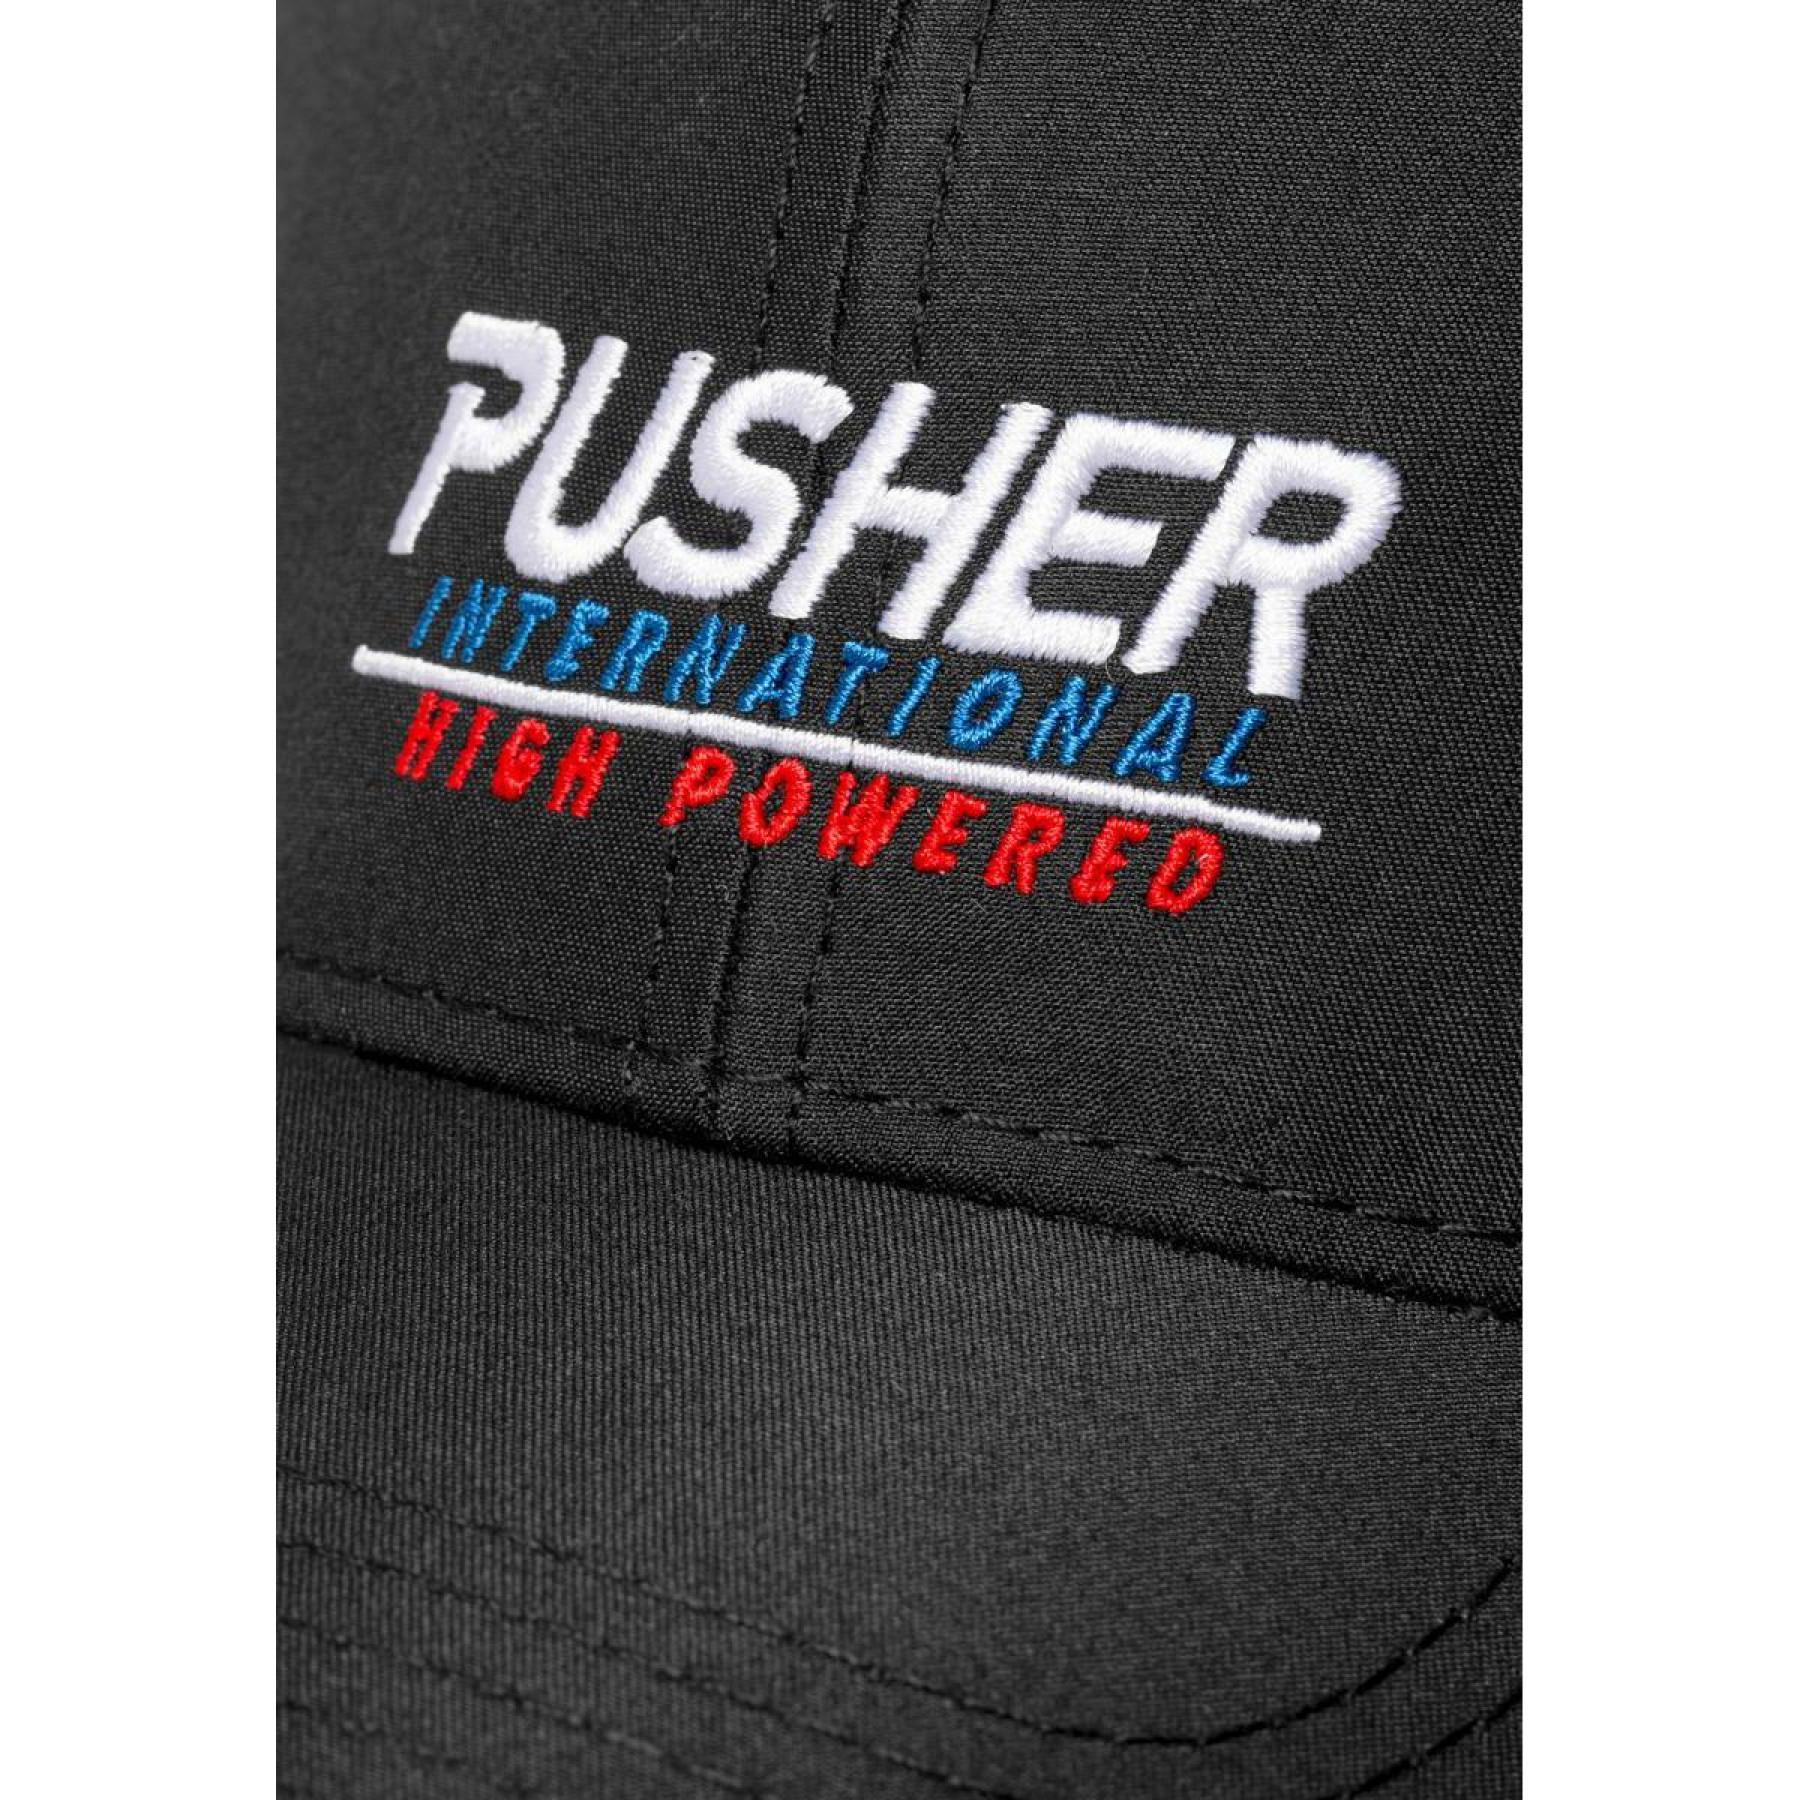 Cap Pusher powered